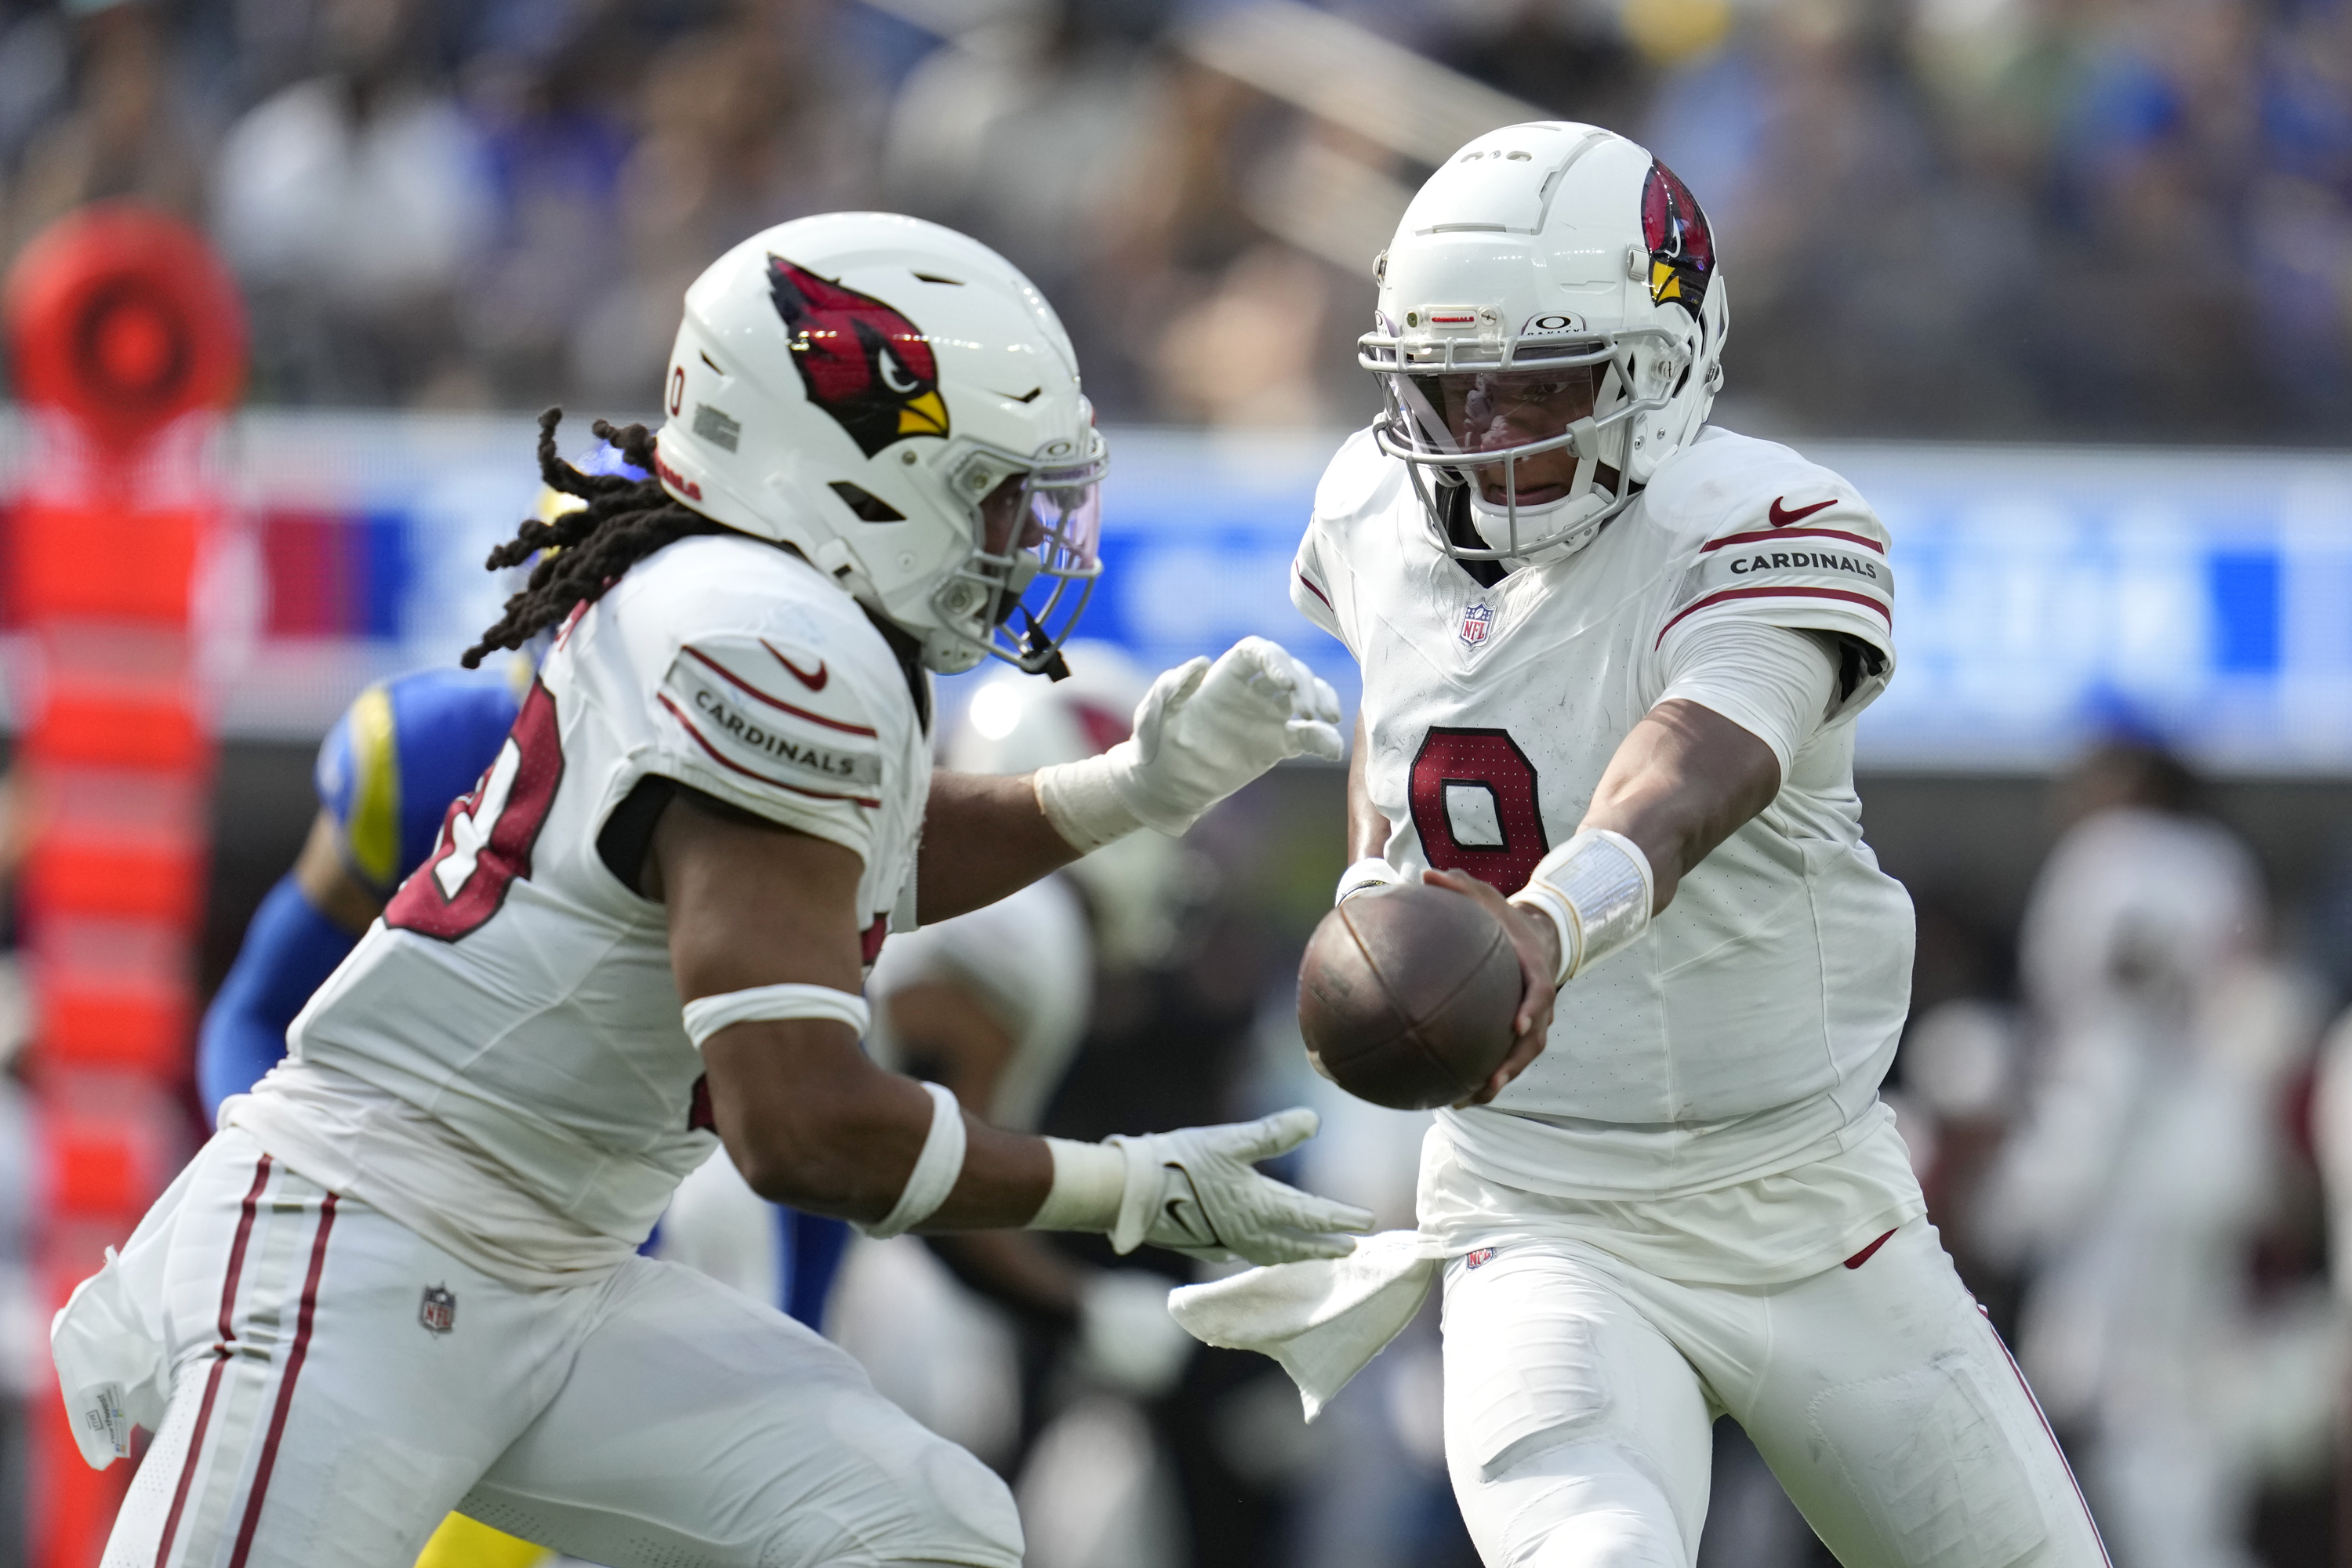 Report: Arizona Cardinals To Unveil New Uniforms Ahead Of NFL